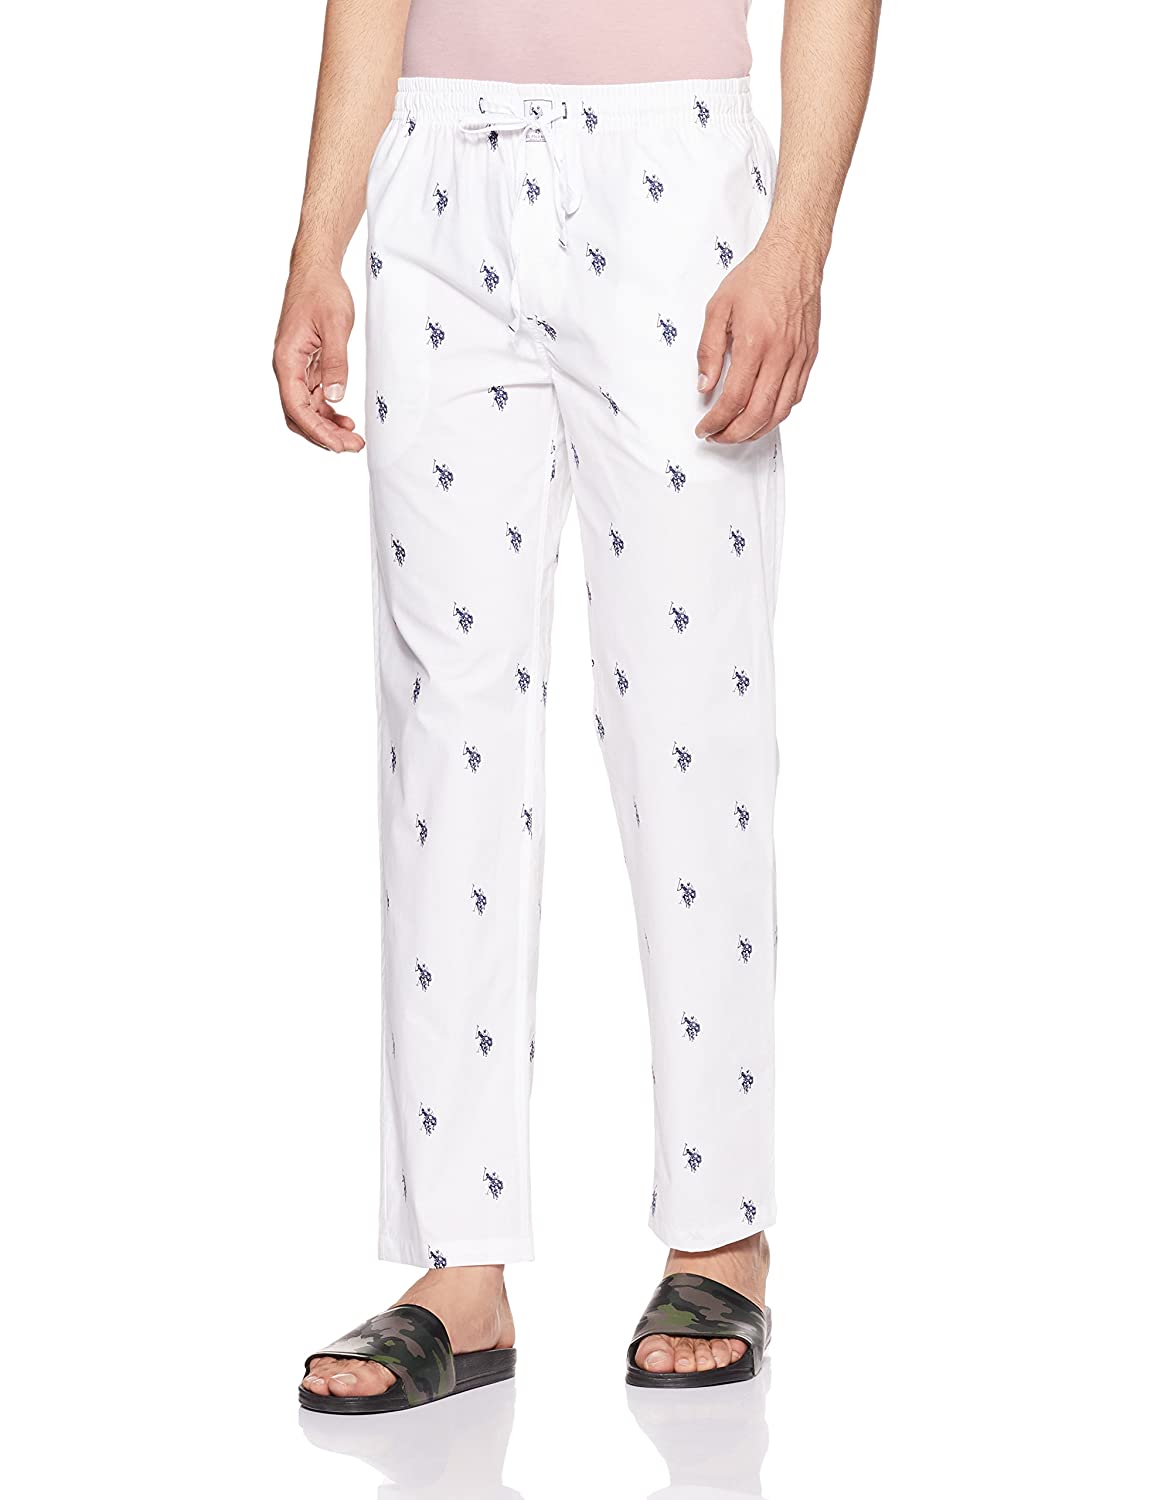 US Polo White Pyjama Lower Night wear for Men - Stilento